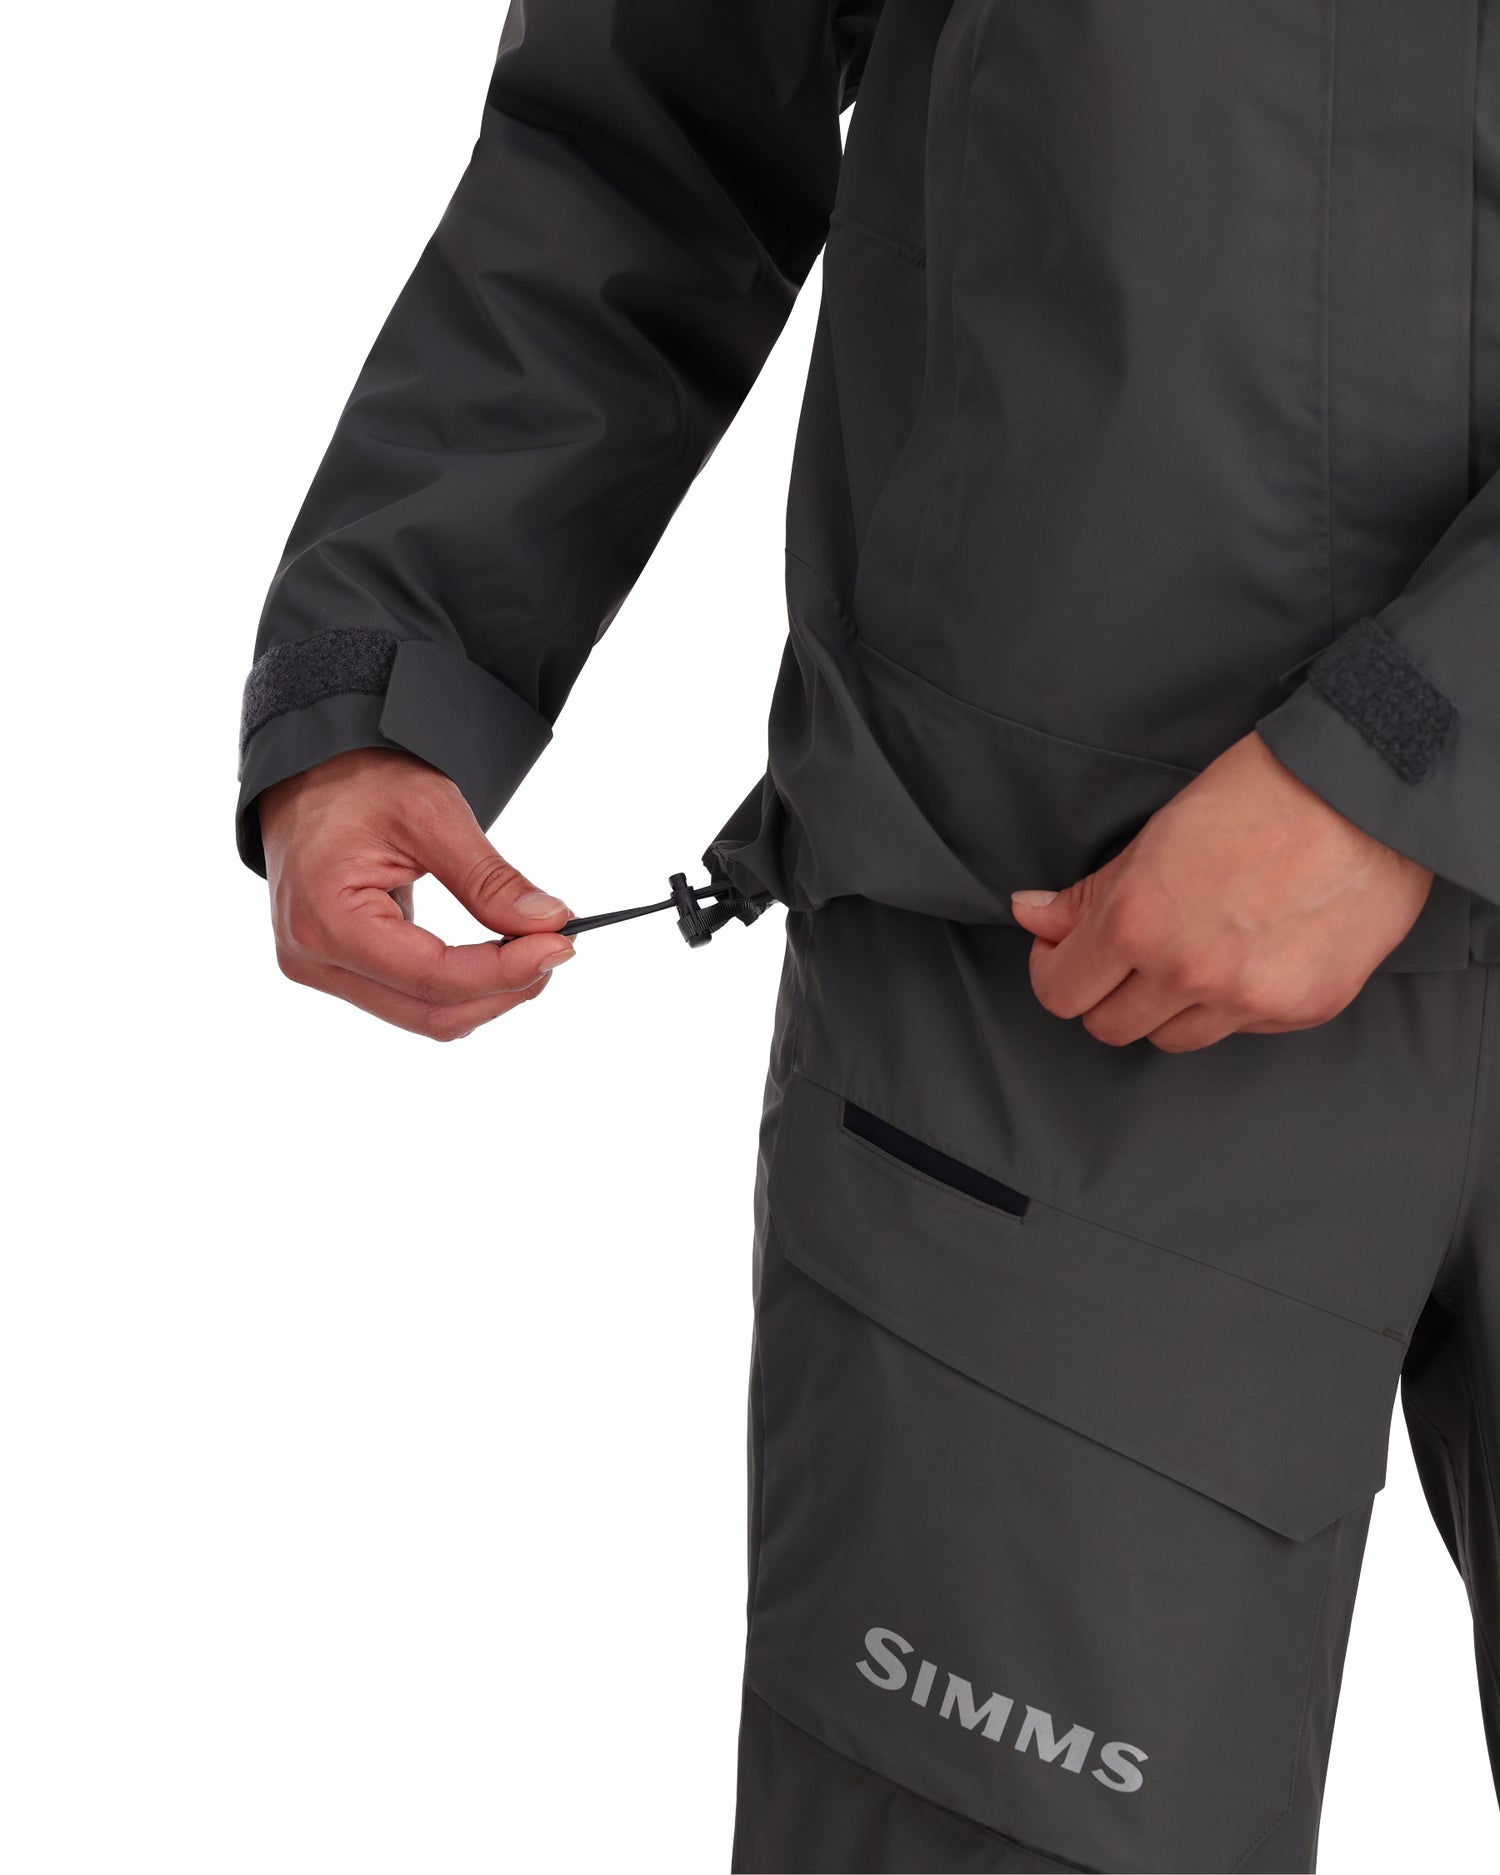 13678-096-simms-challenger-jacket-model